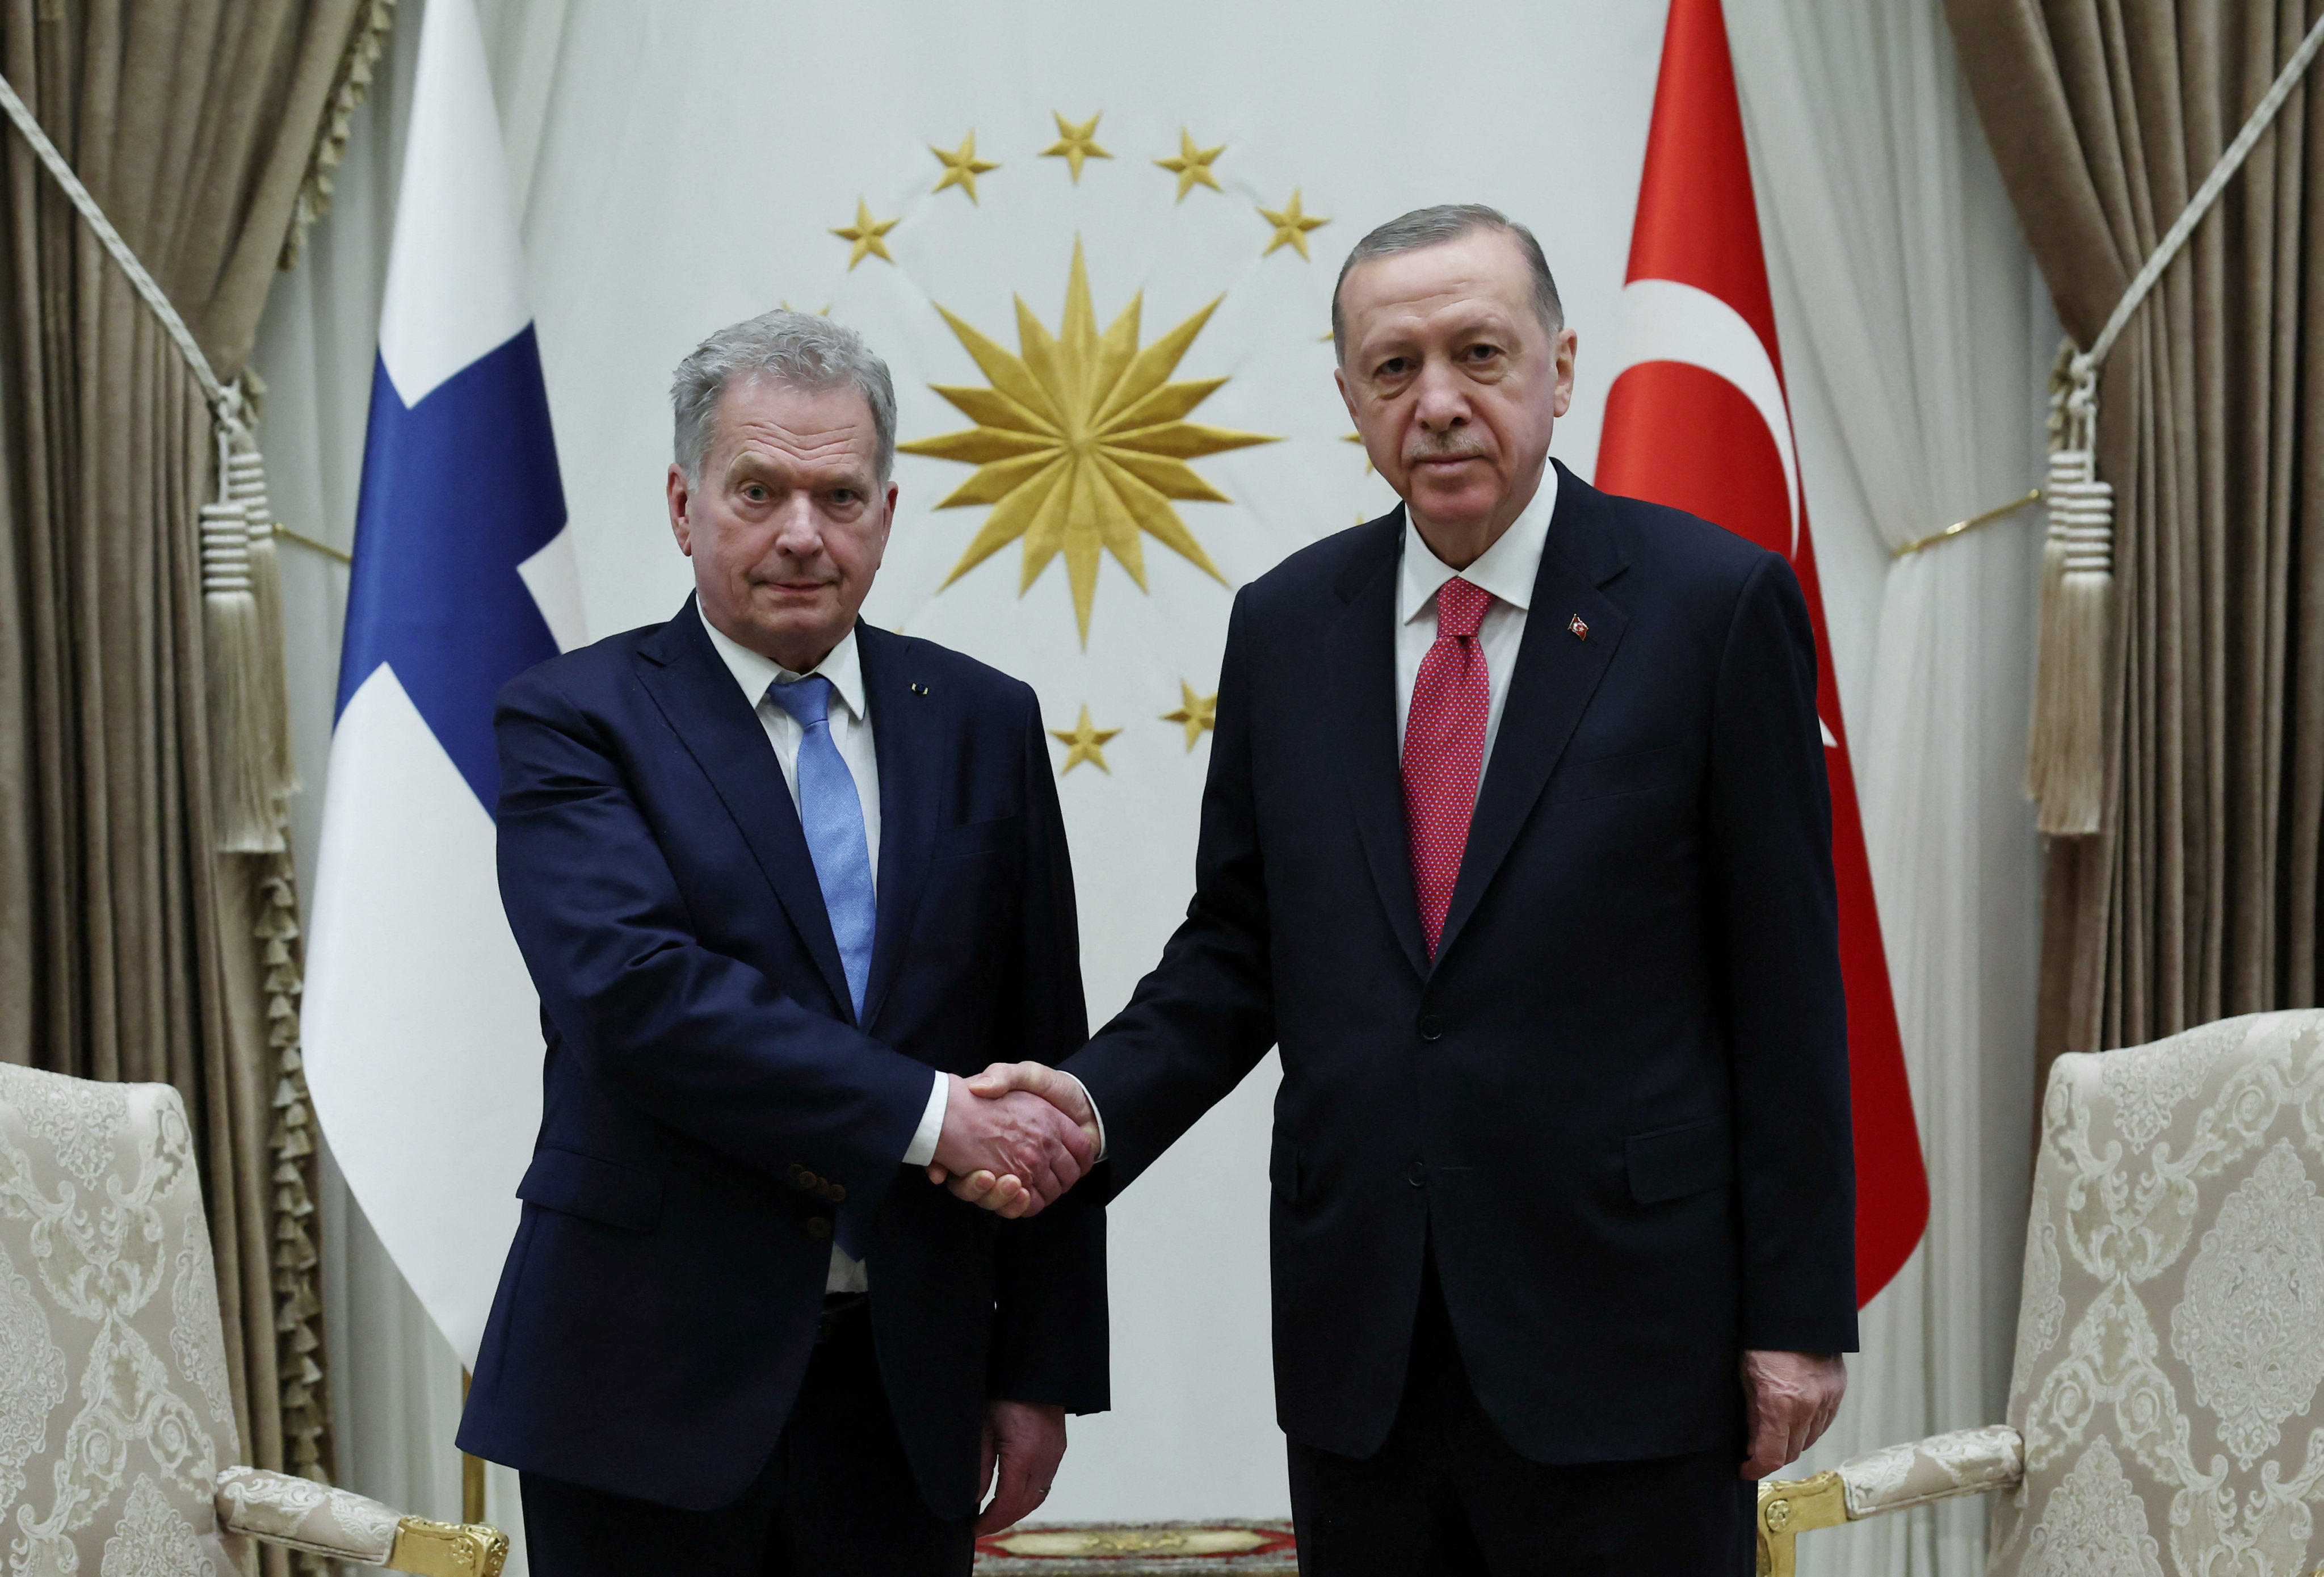 Turkey’s President Recep Tayyip Erdogan (right) and Finland’s President Sauli Niinisto shake hands during their meeting in Ankara on March 17. Photo: Turkish Presidential Press Office via Reuters